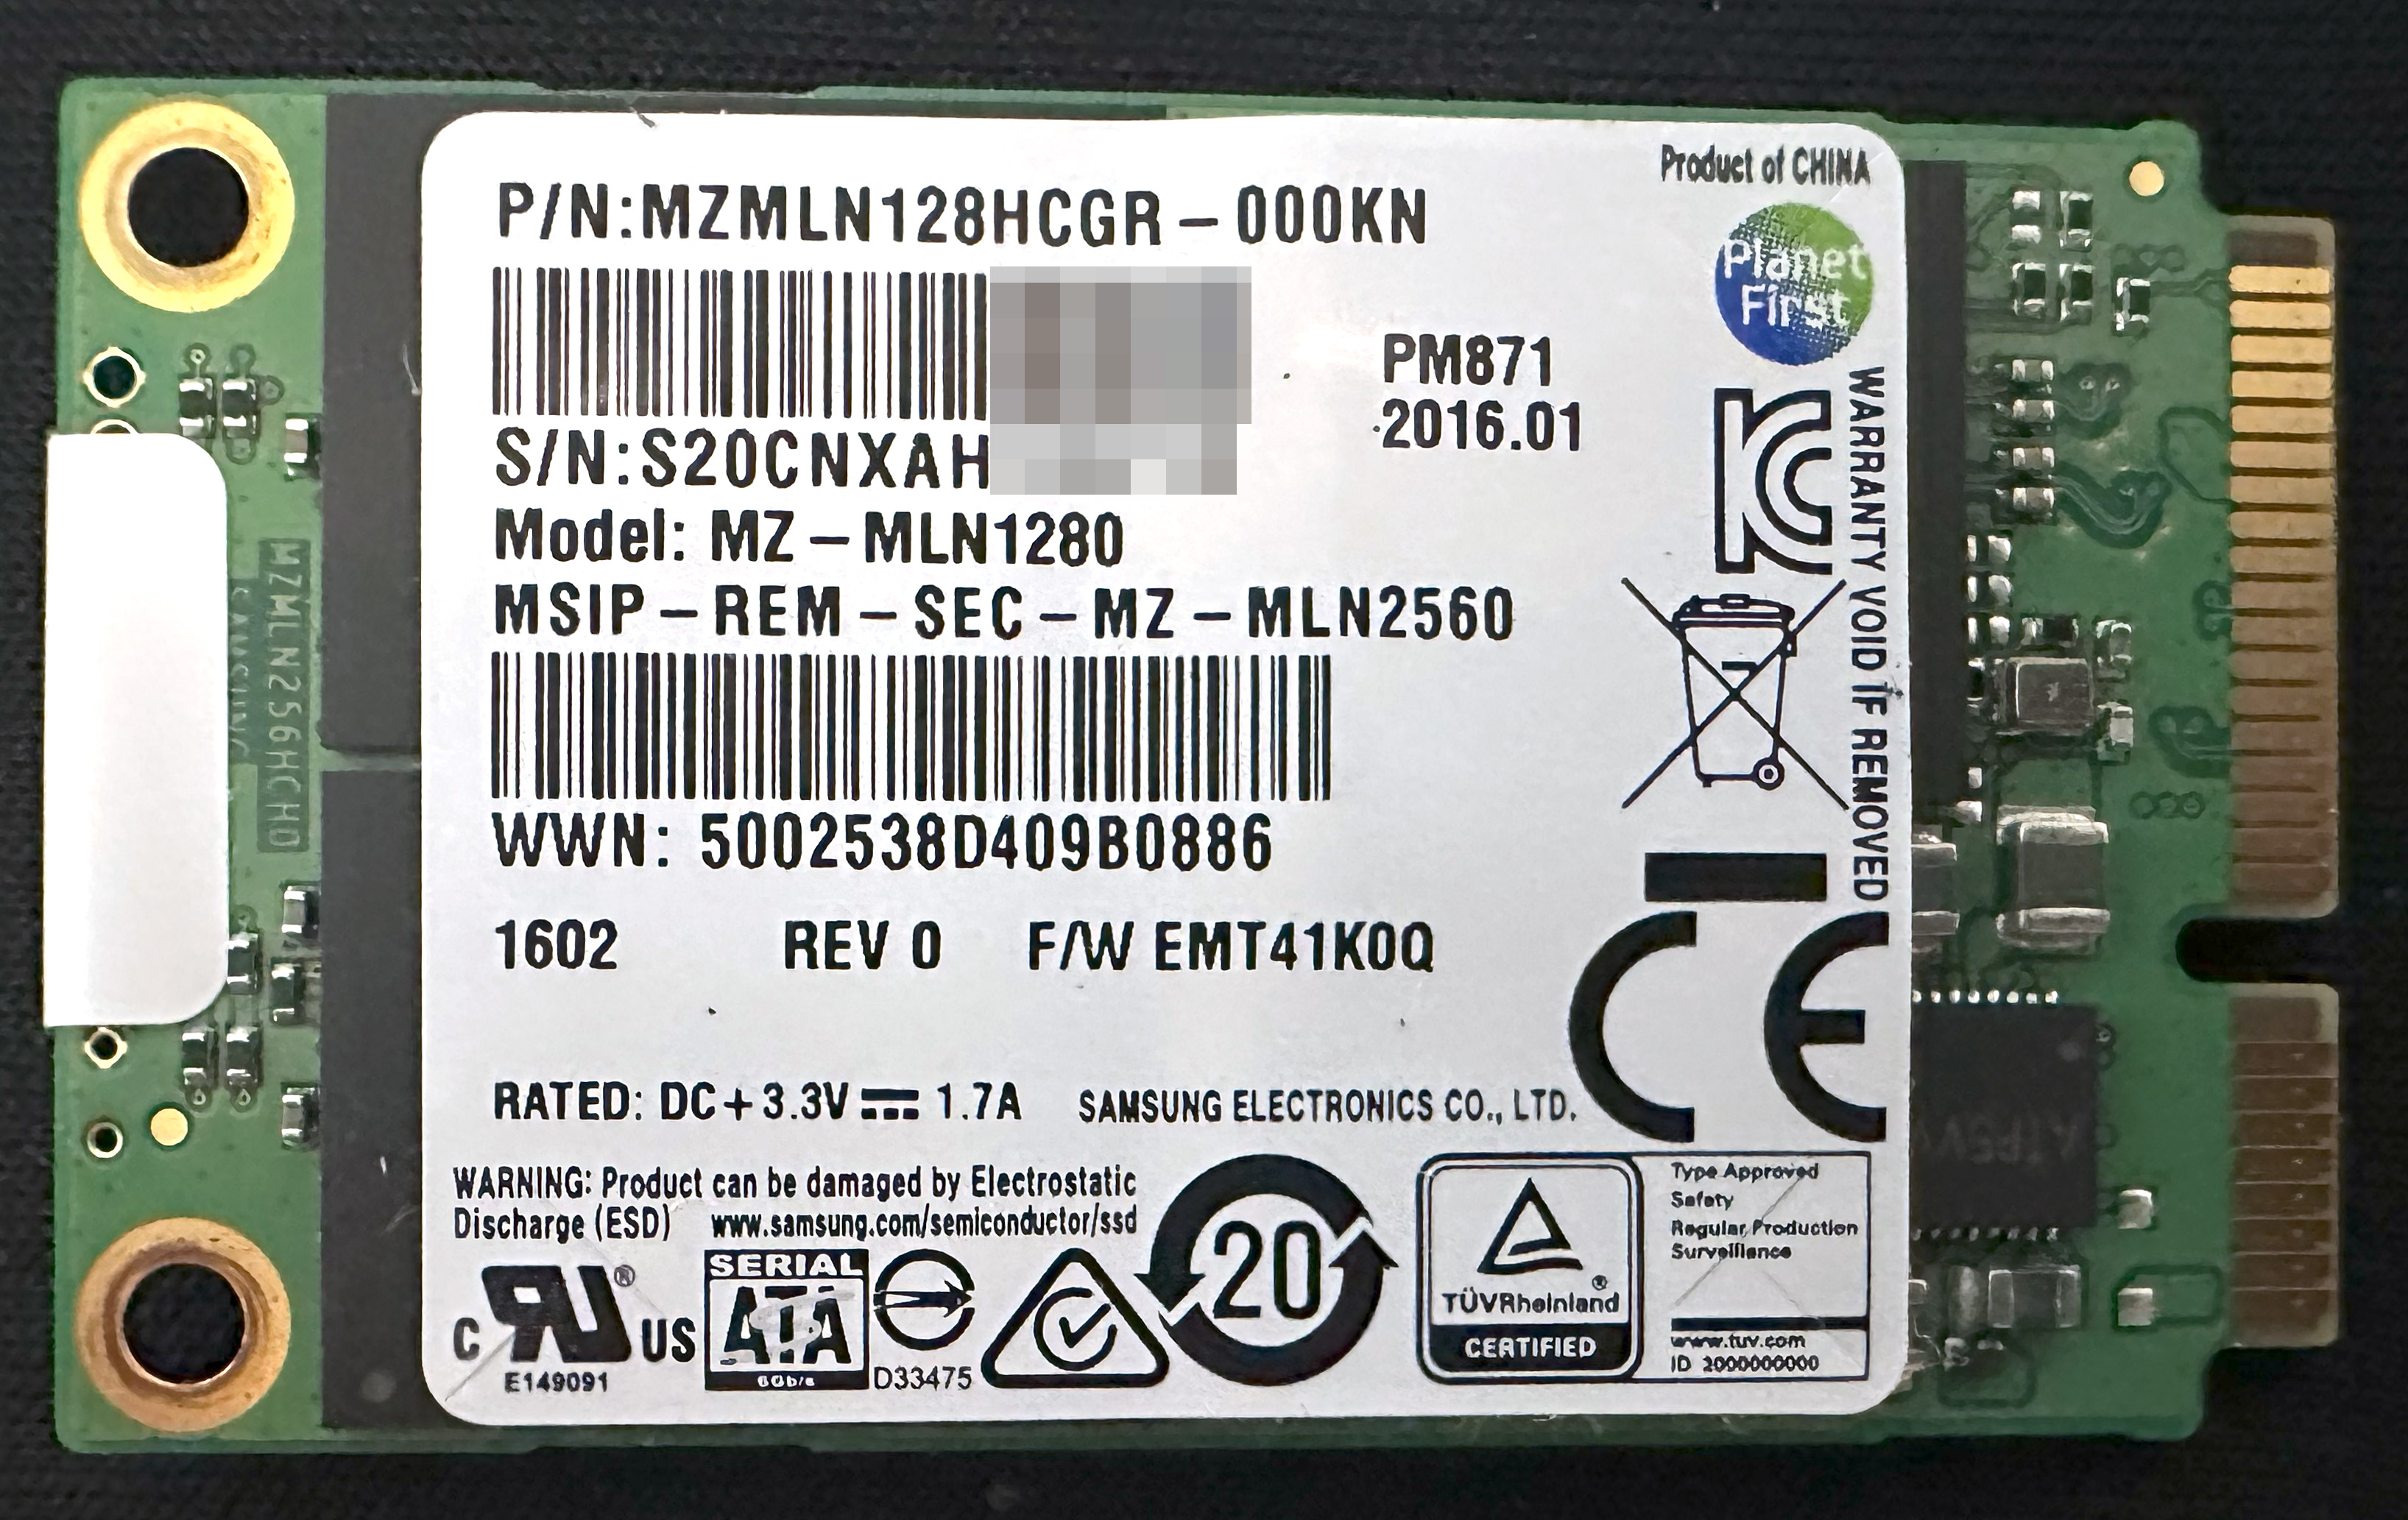 Samsung PM871 mSATA 128GB (MZ-MLN1280 &amp;#124; MZMLN128HCGR-000KN)